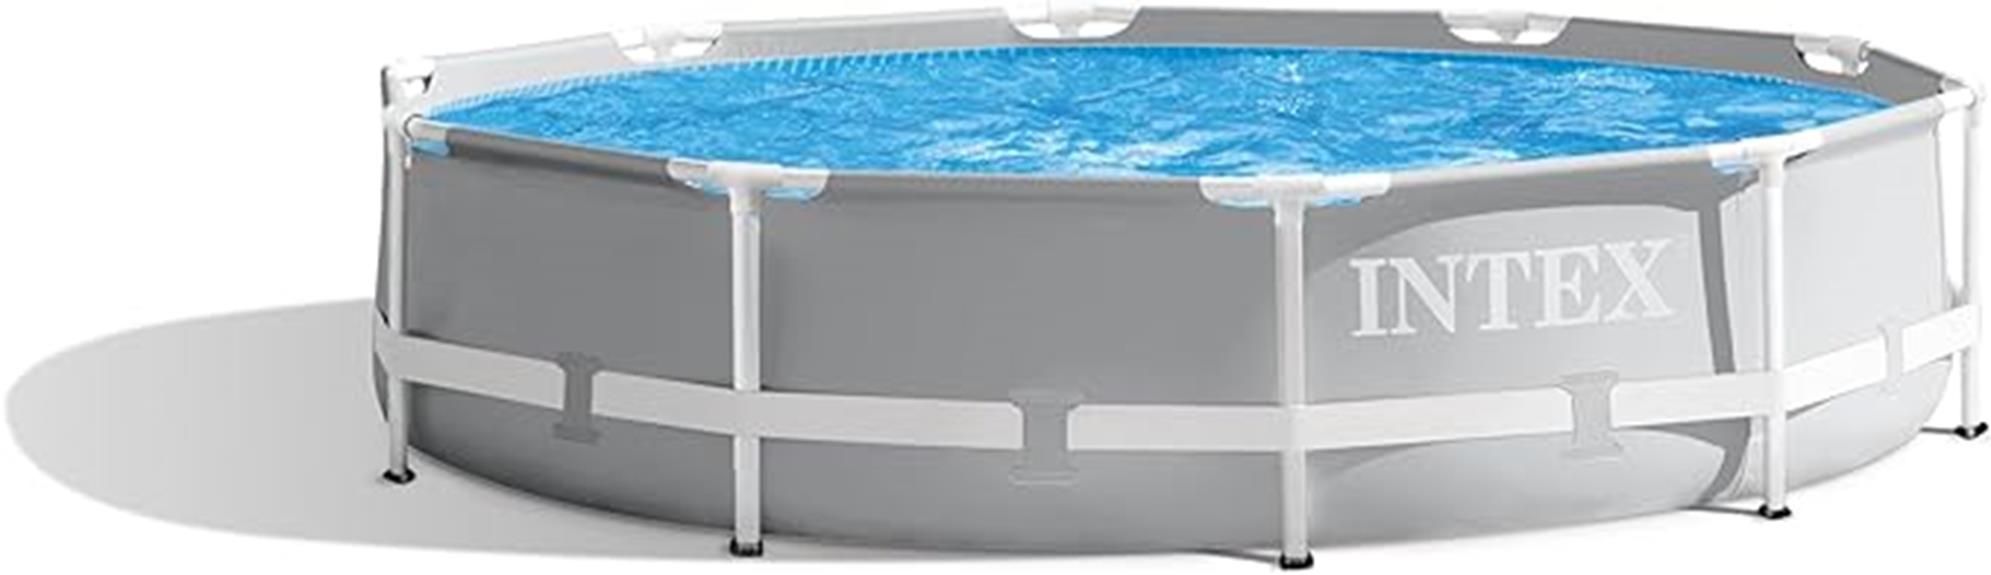 durable premium above ground pool